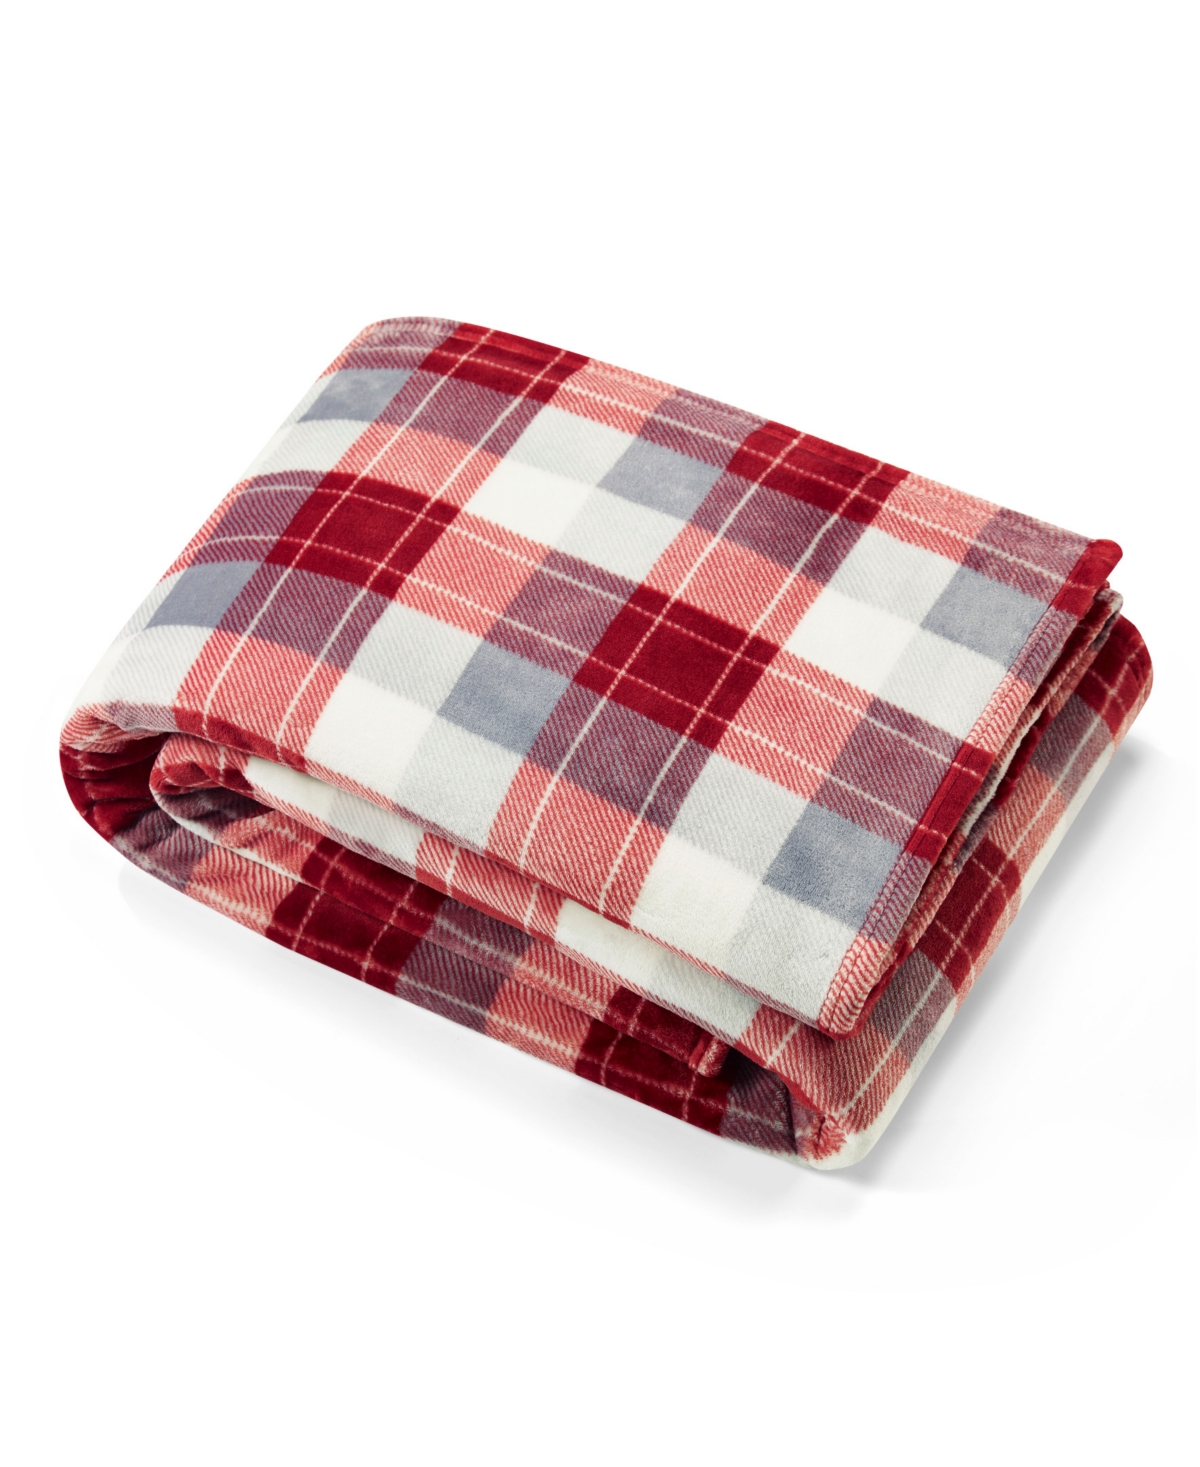 Nautica Ultra Soft Plush Blanket, King In Bluff Plaid Red